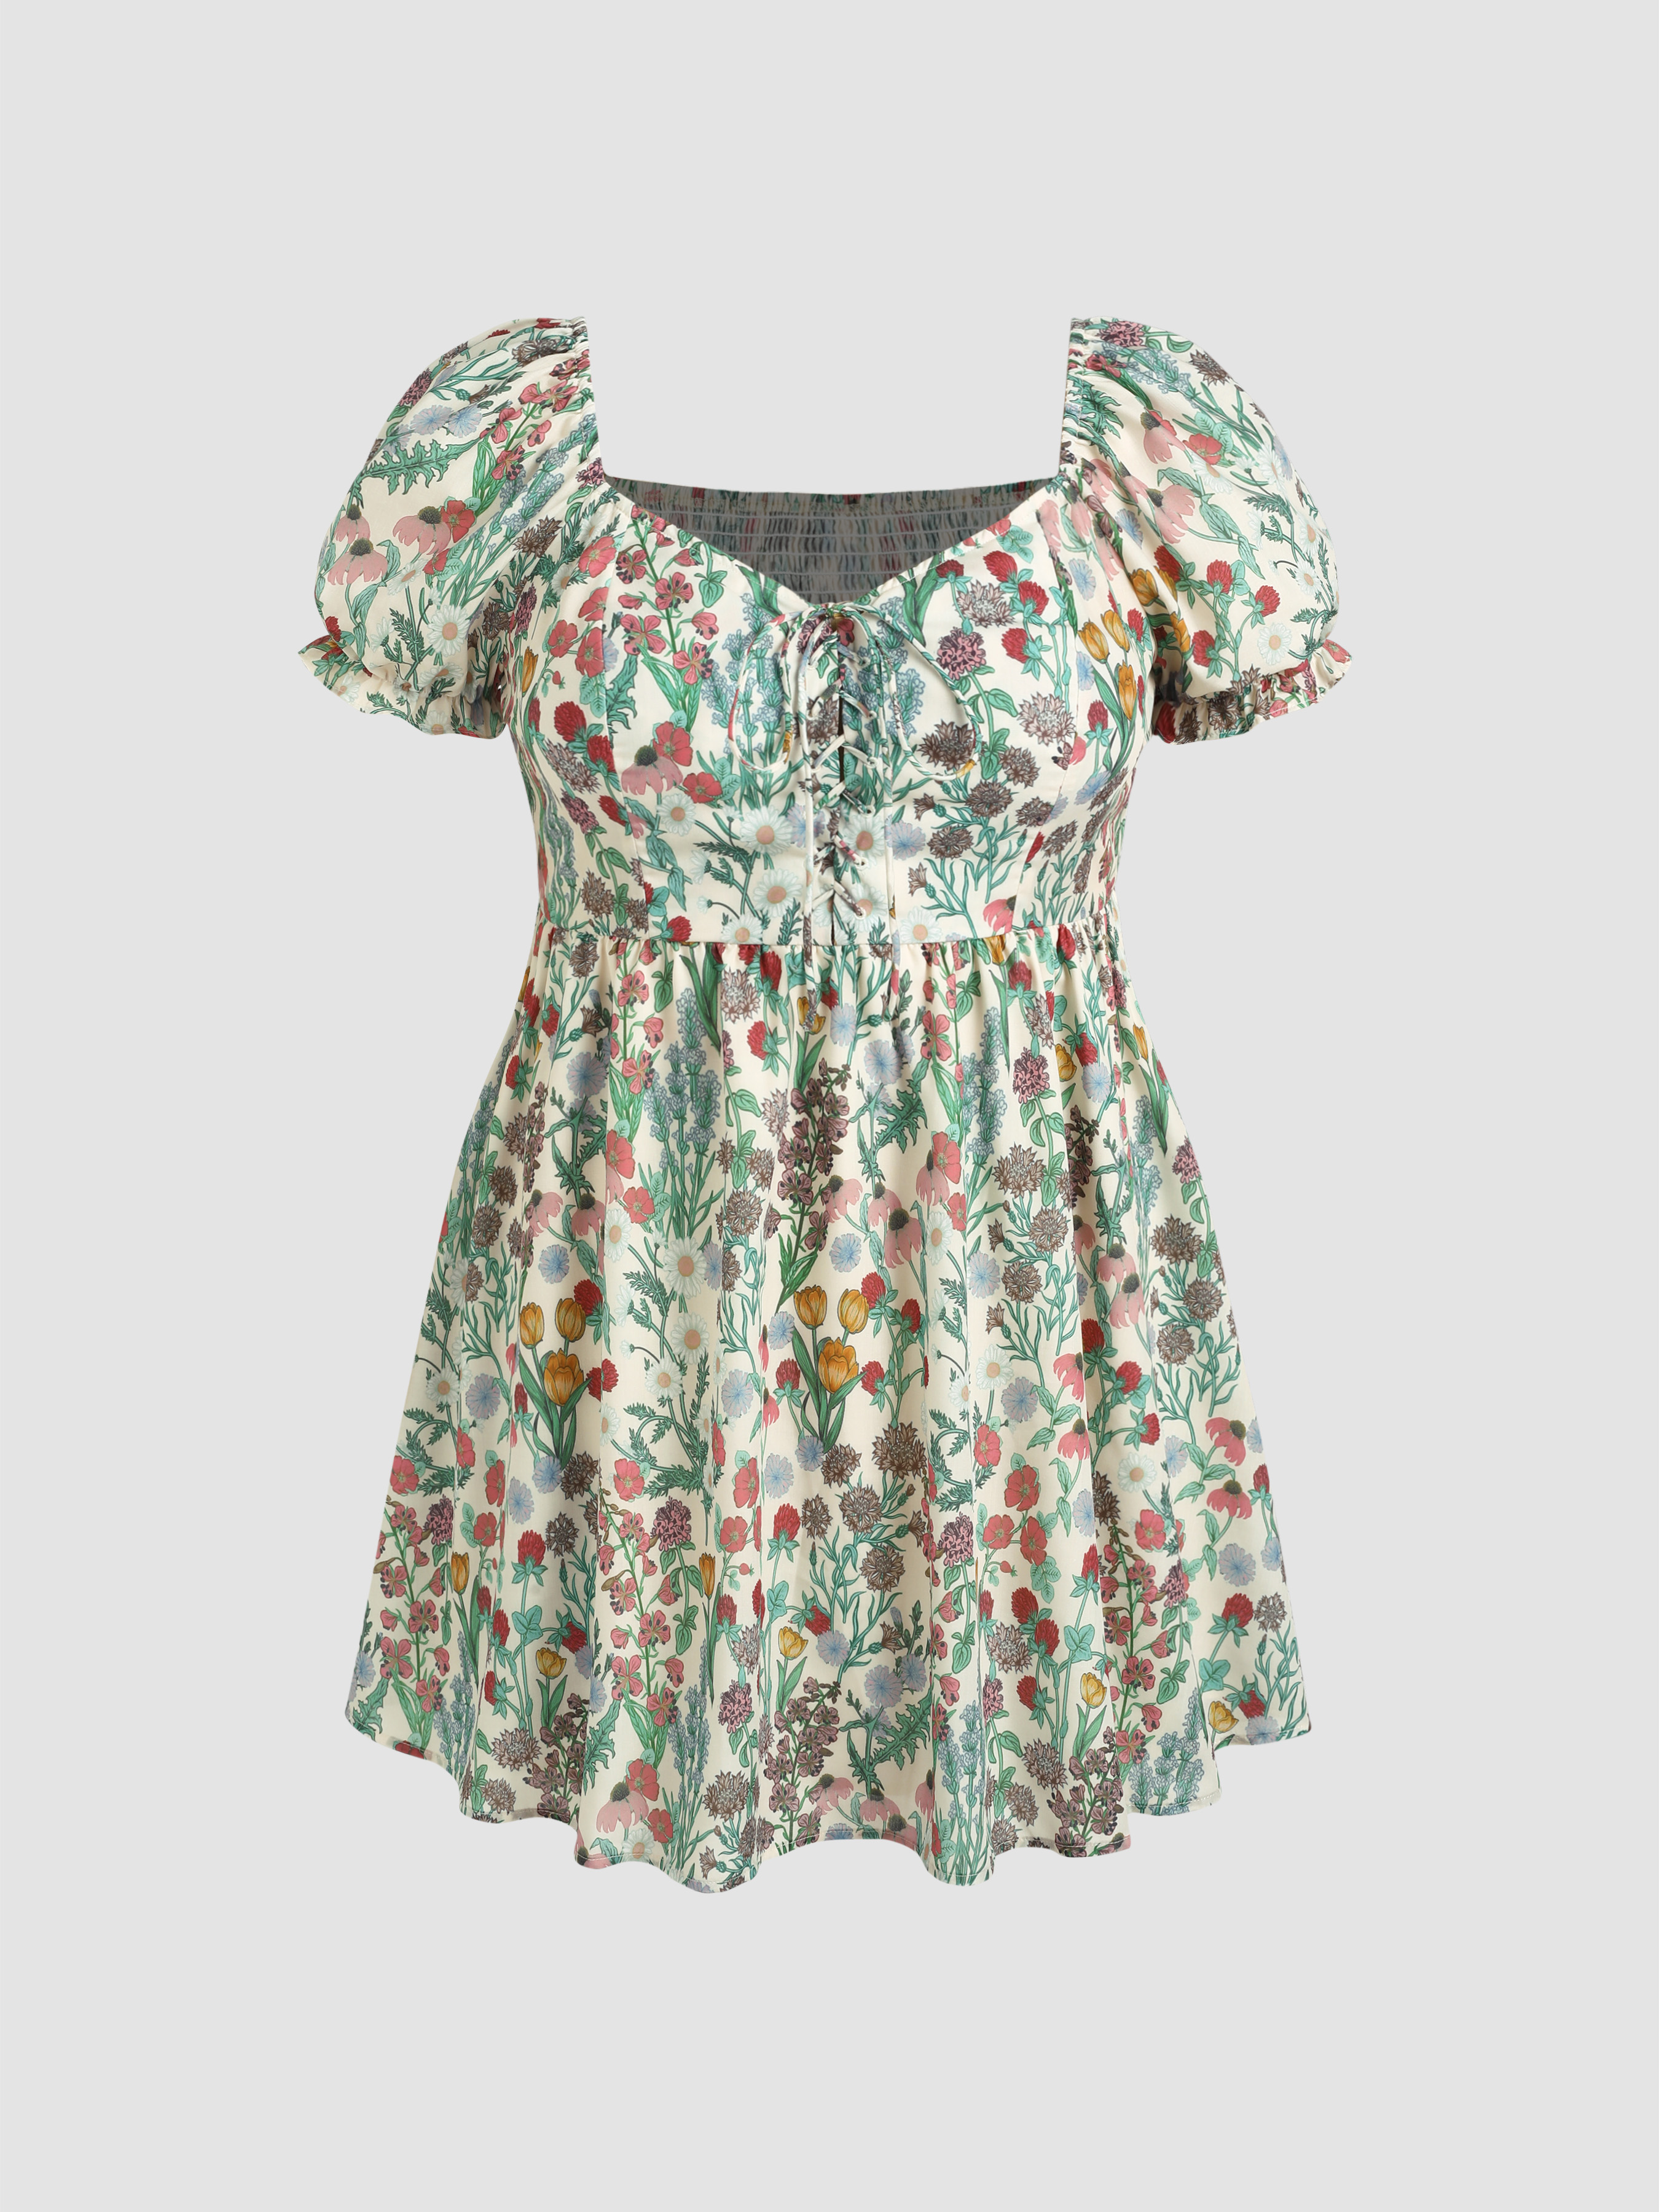 2) Summer Mini Dresses Sleeveless Juniors Women Size 4 American Eagle &  GUESS | eBay